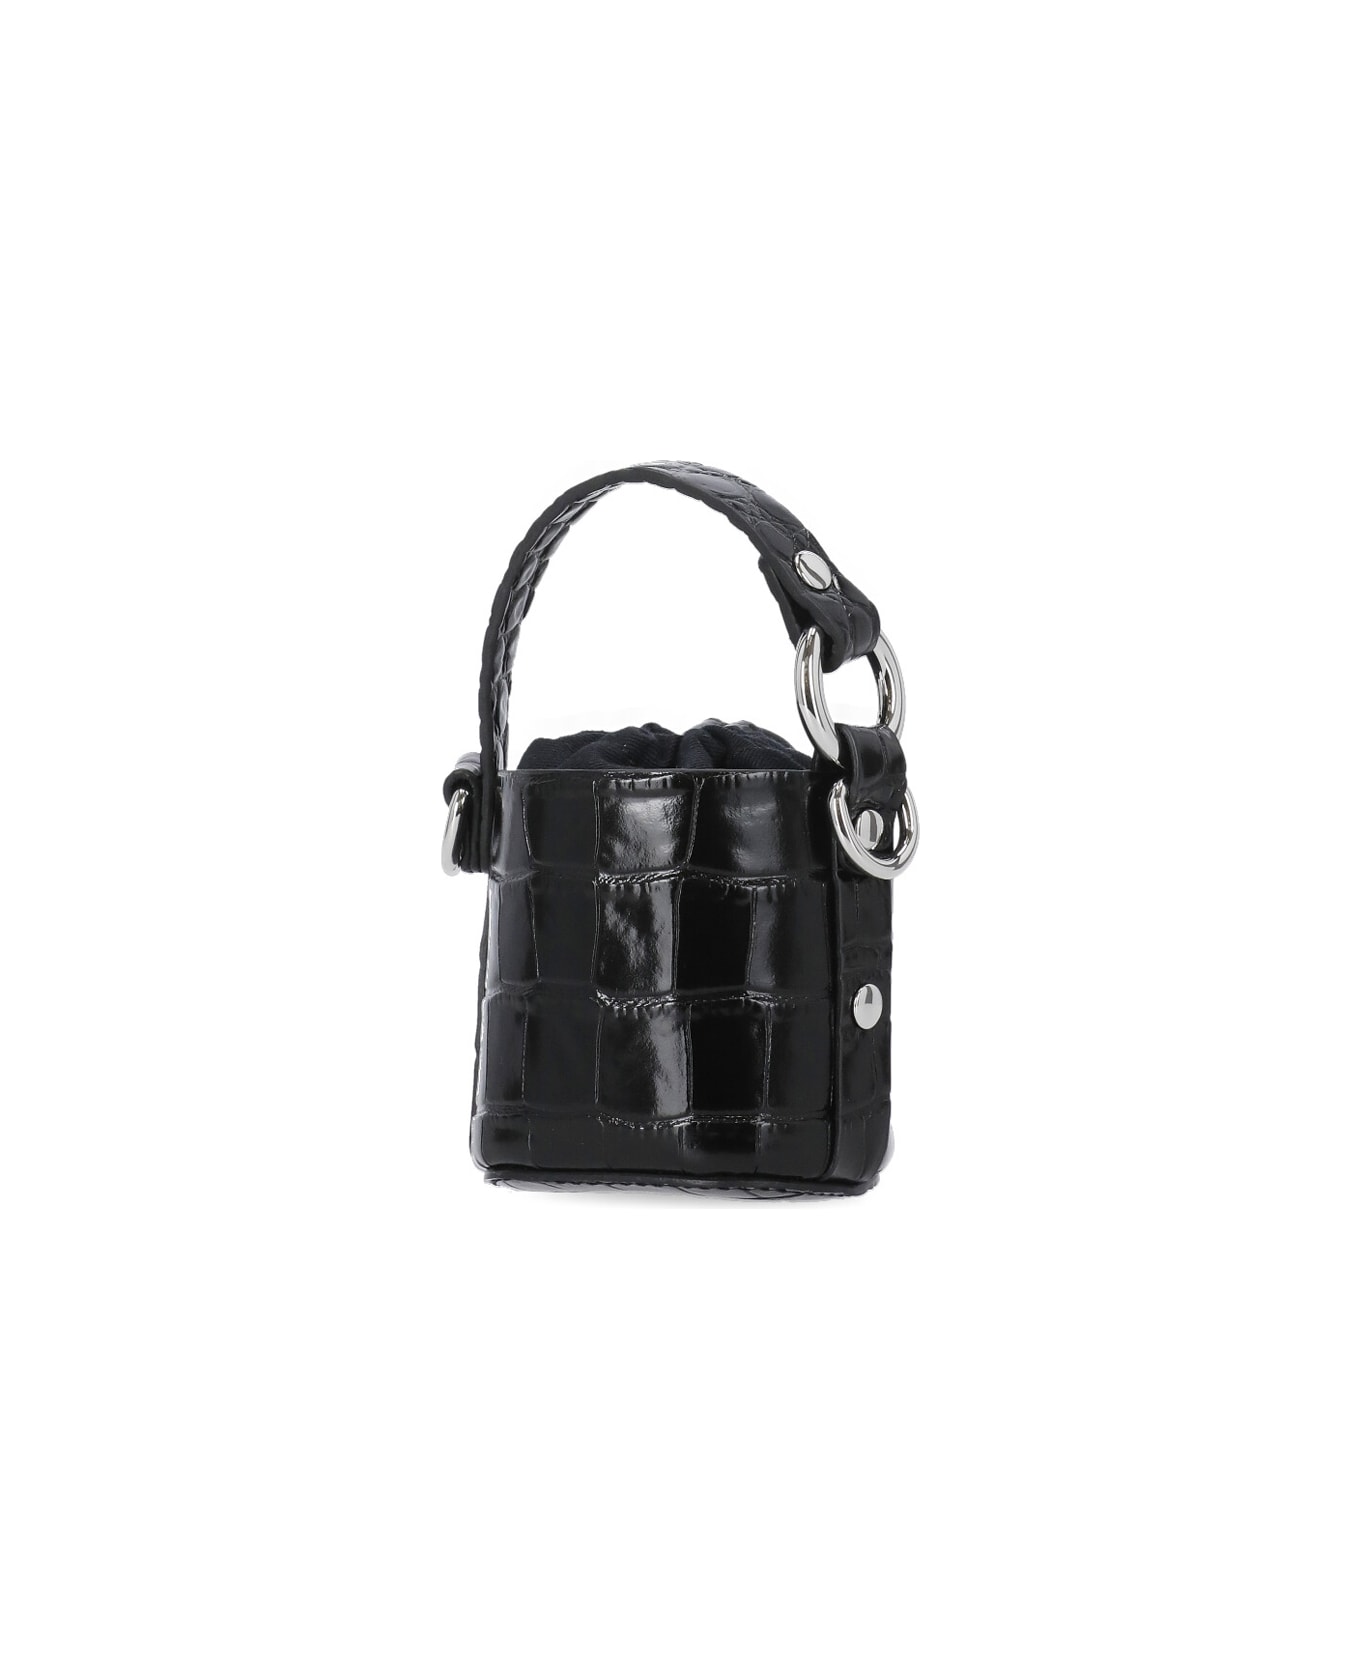 Vivienne Westwood Mini Daisy Bag - Black